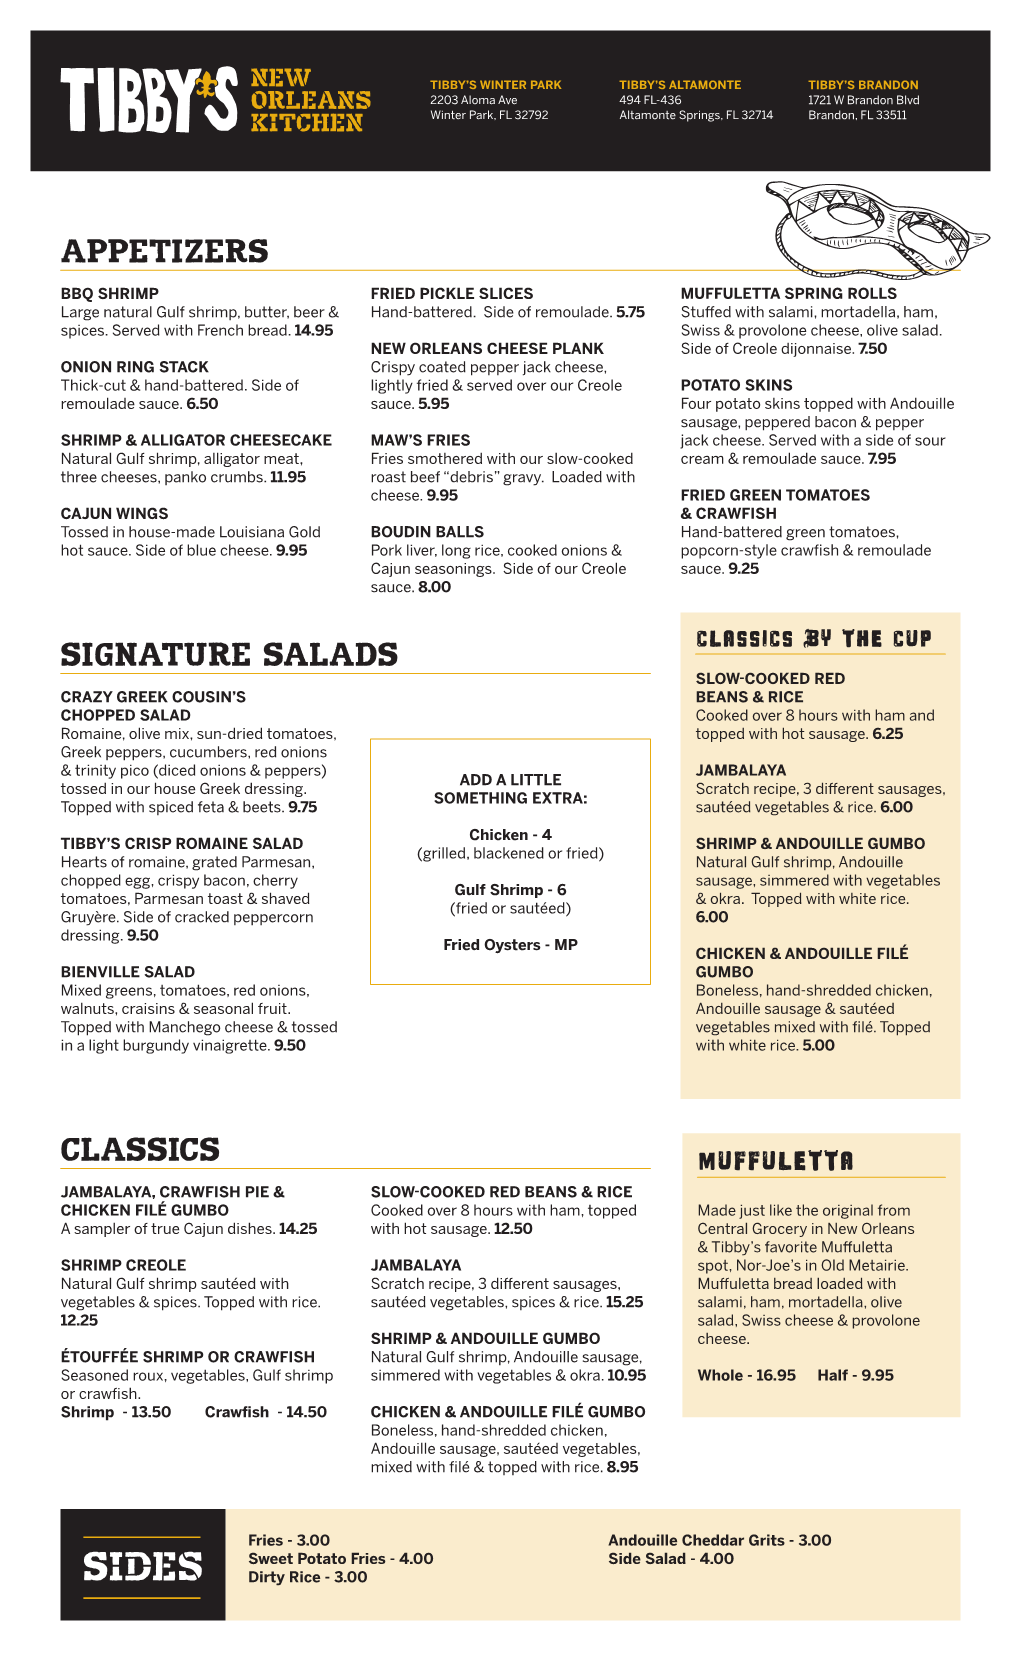 Appetizers Signature Salads Classics